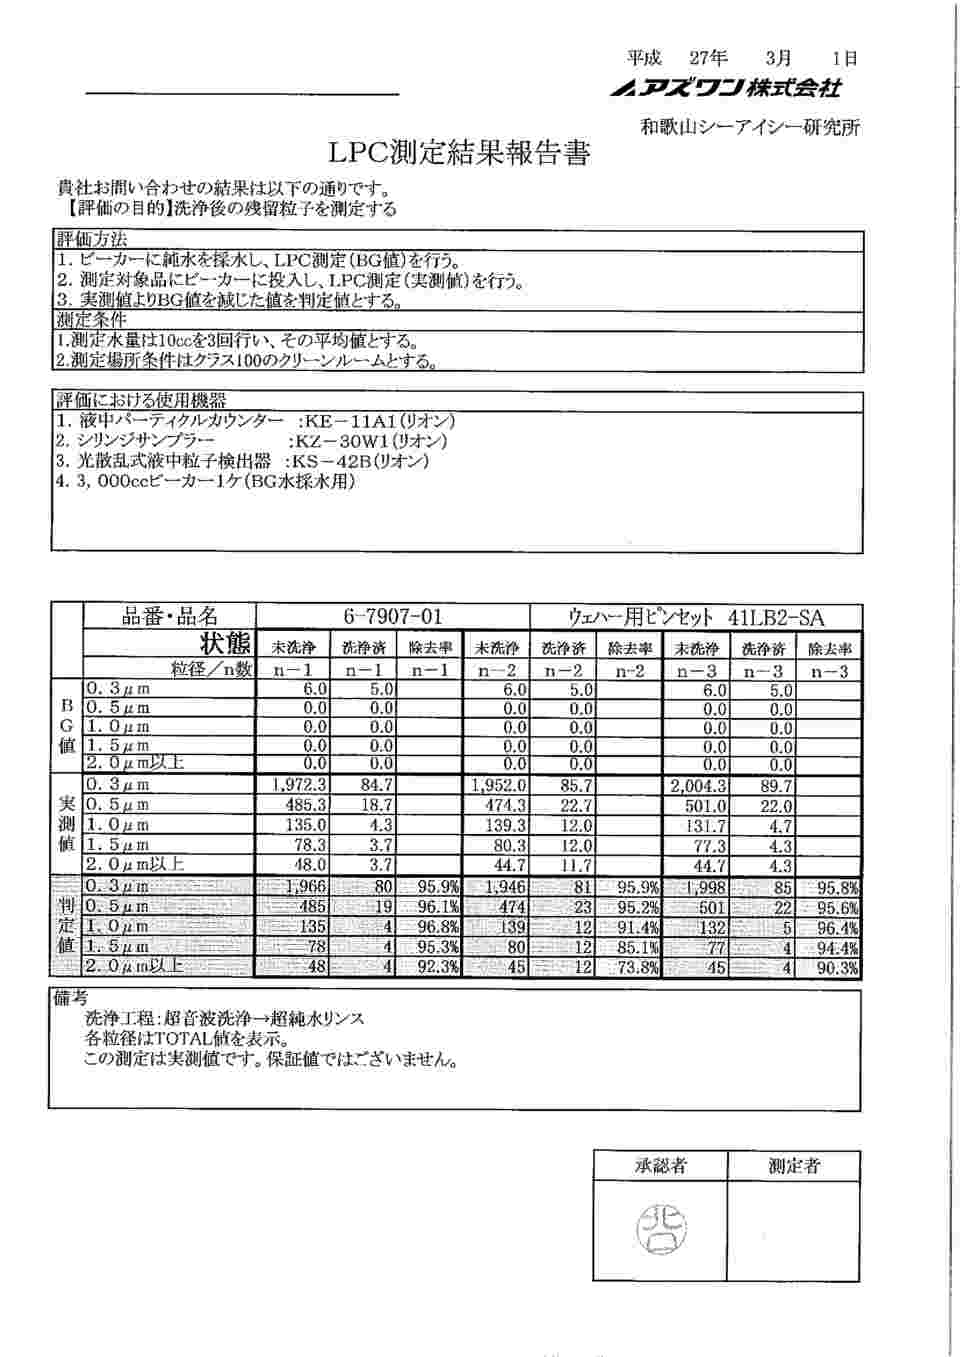 6-7907-07 MEISTERピンセット ウェハー用 幅広 耐酸鋼 41LB8-SA 【AXEL